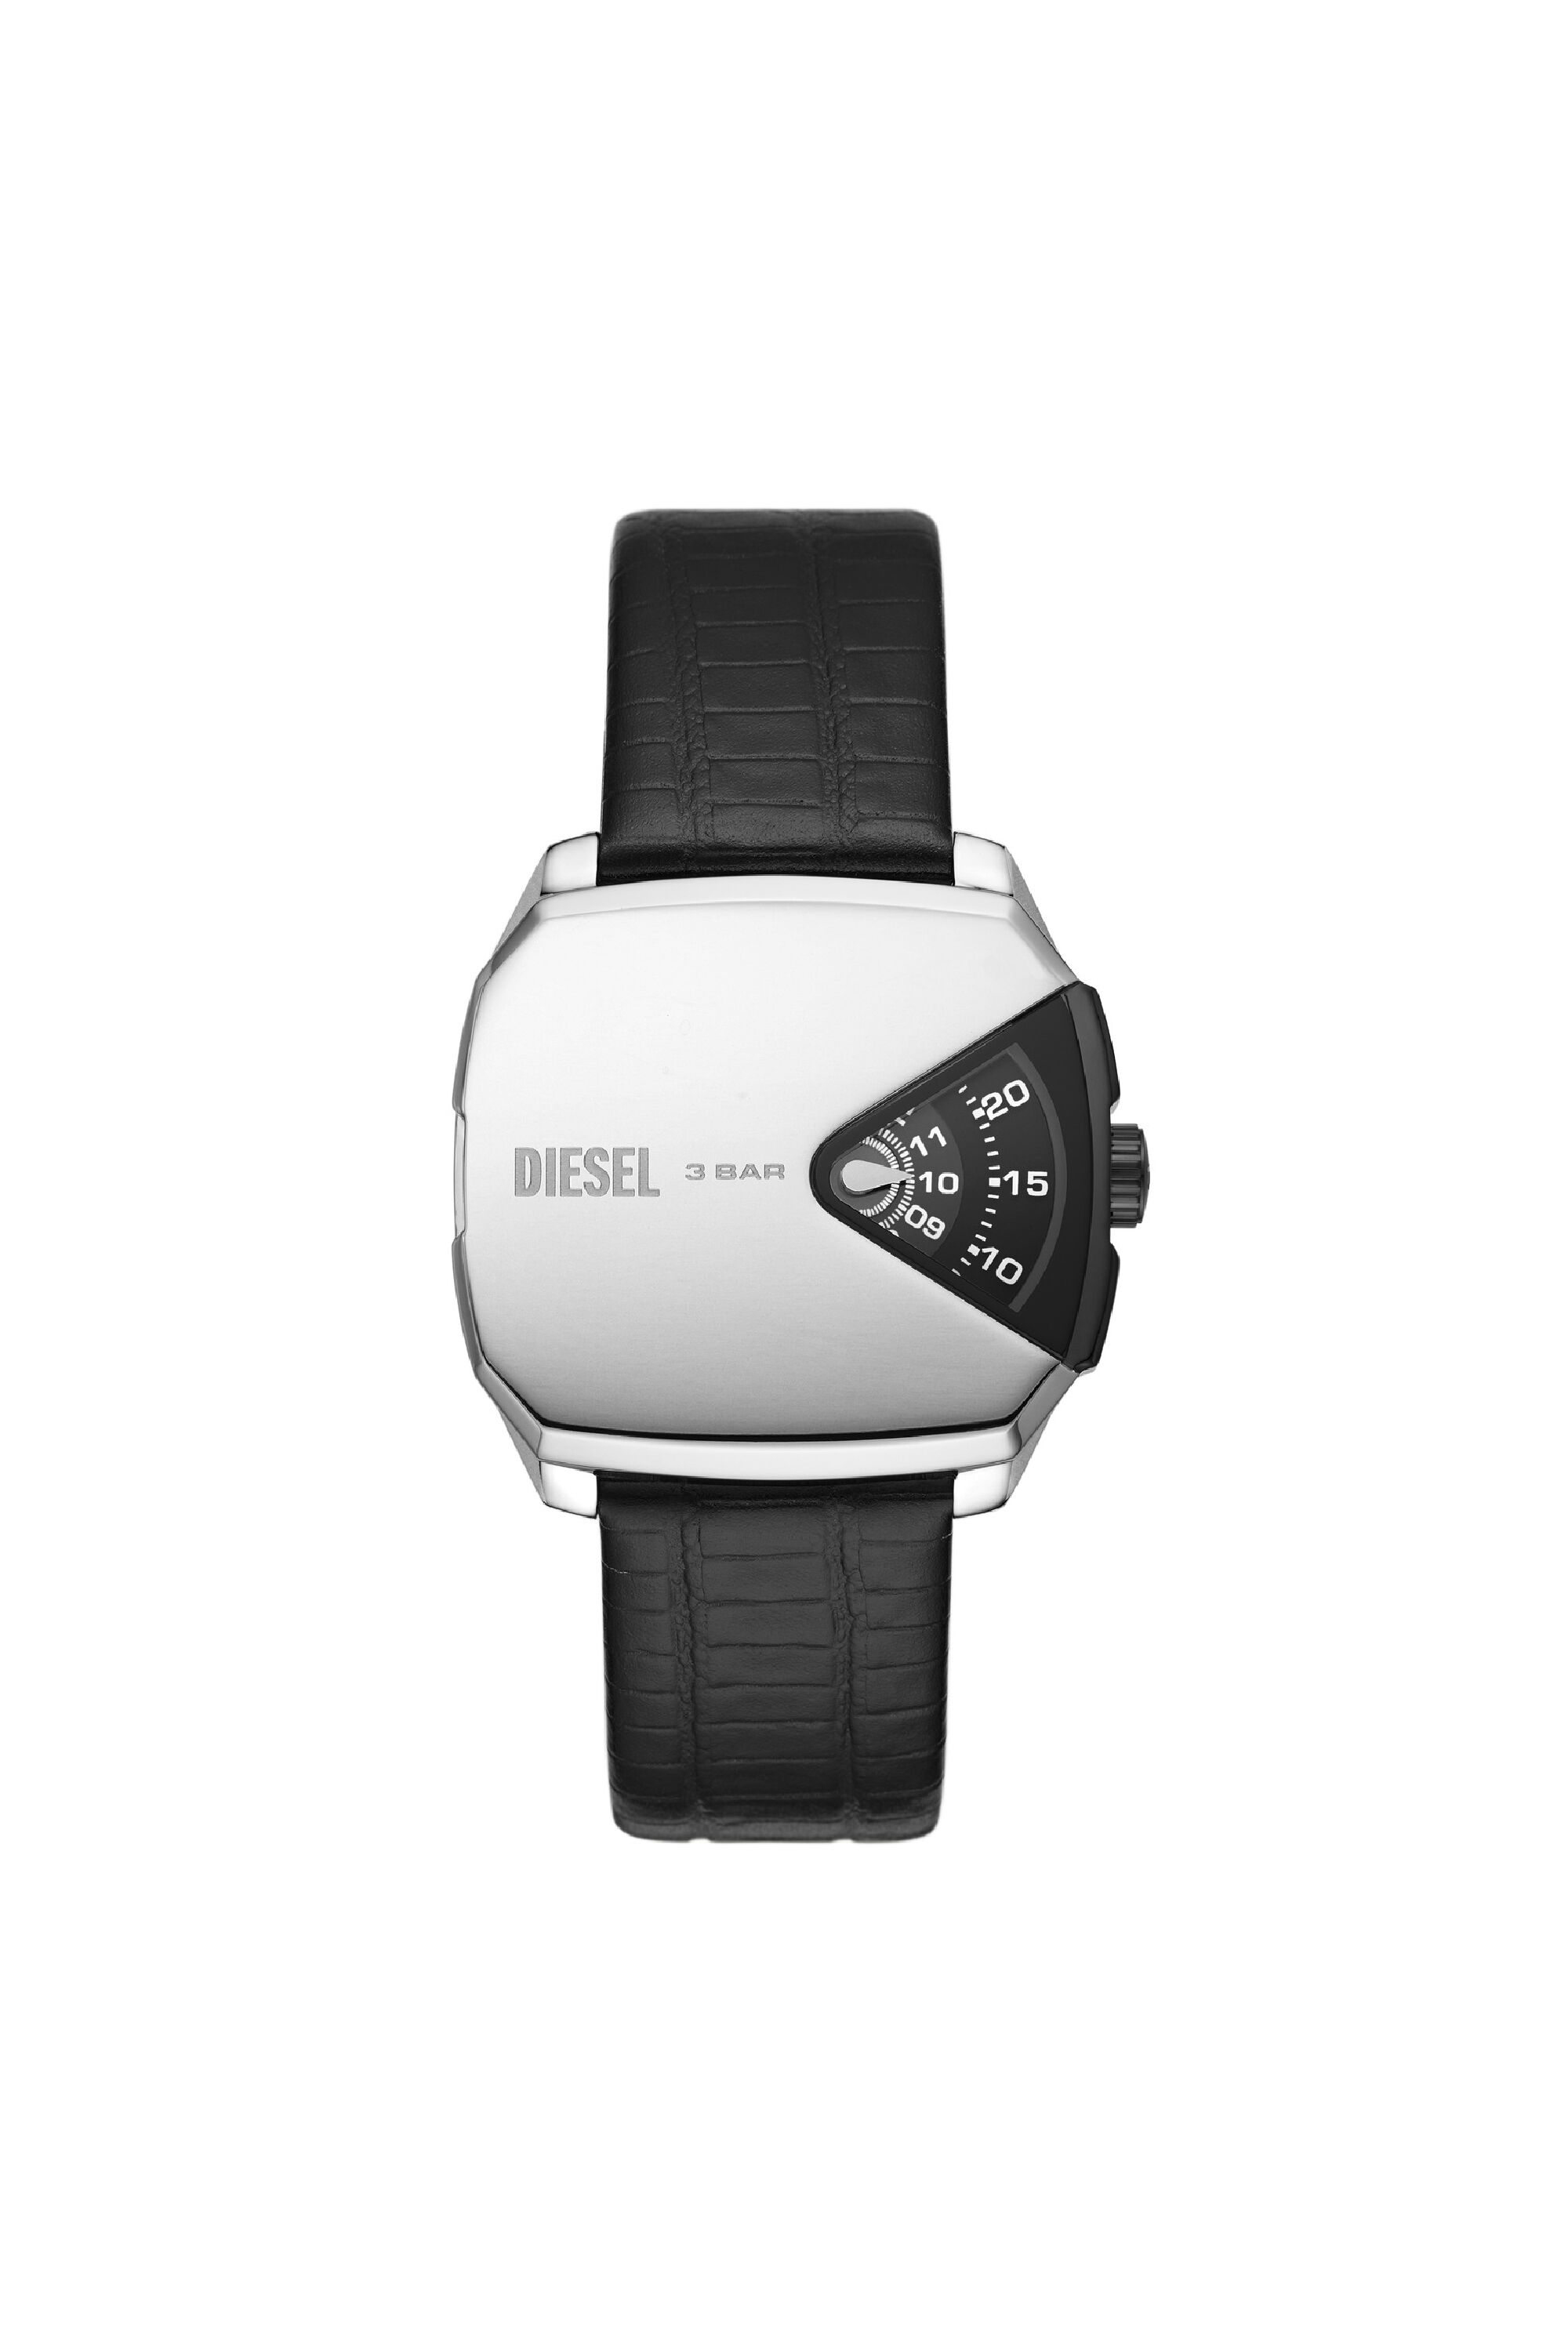 Diesel - DZ2153, Black - Image 1